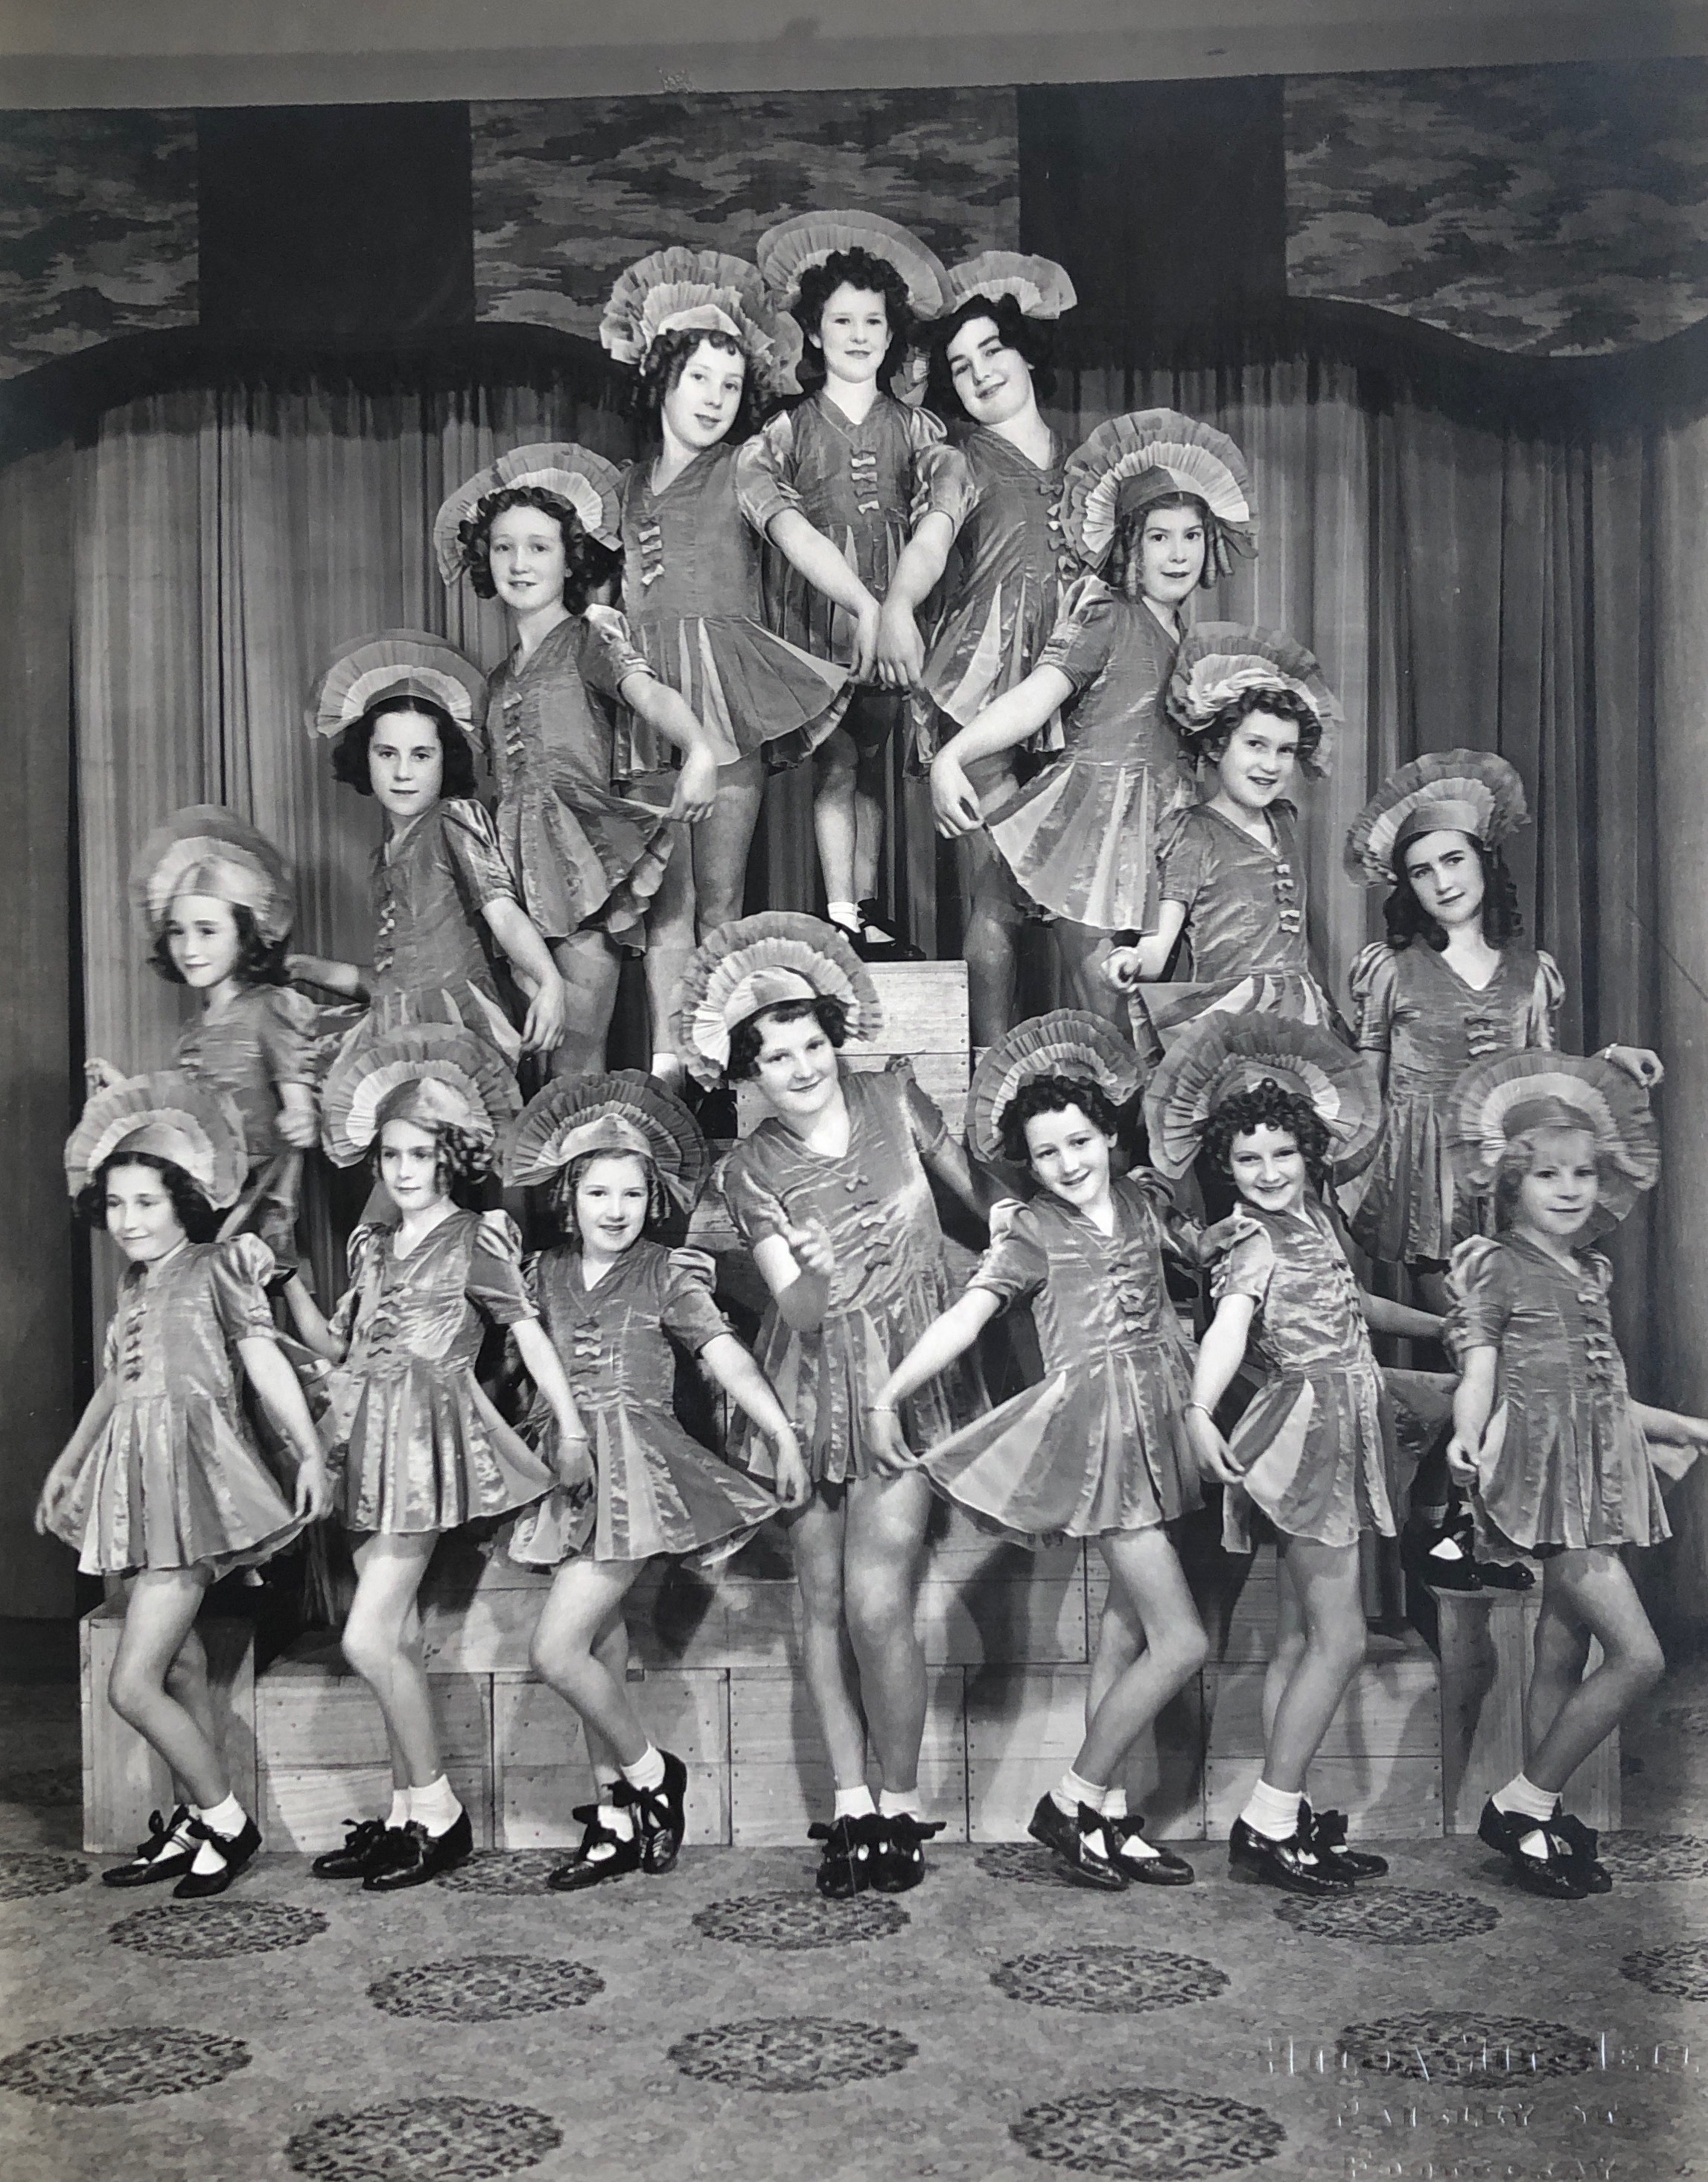 Ivy Emms Dancing Margaret Wishart 3rd from left 1937/8